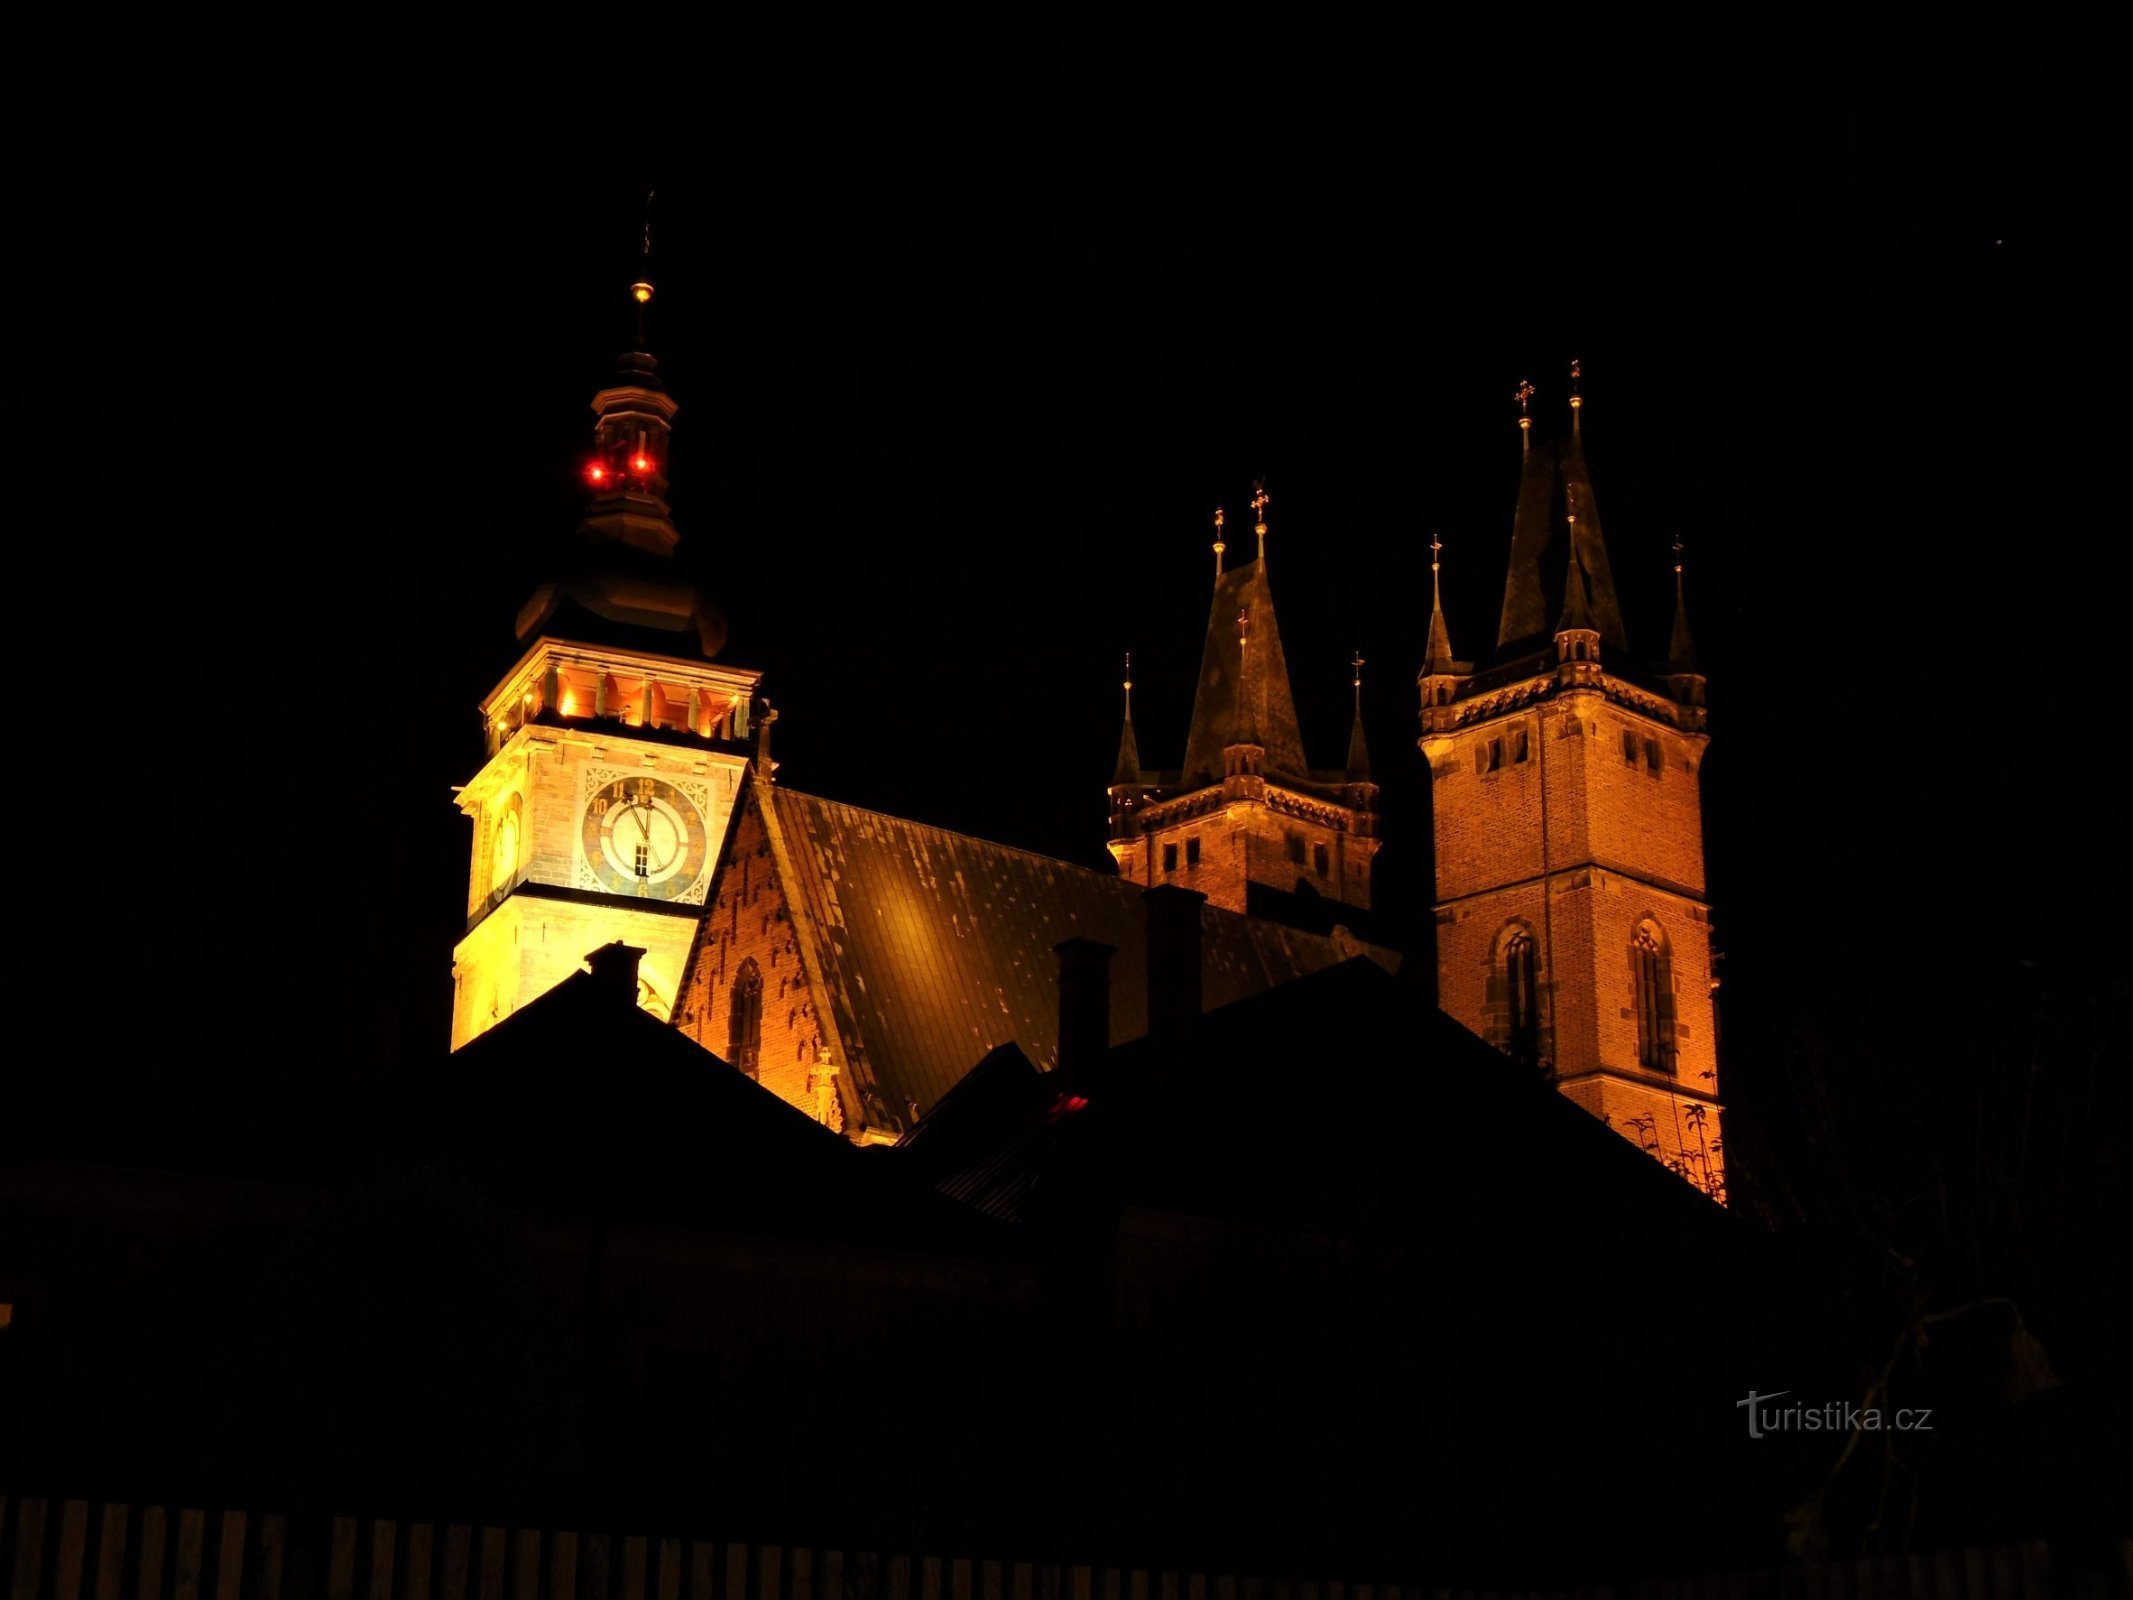 De witte toren met de kathedraal van St. Geest (Hradec Králové, 27.9.2020/XNUMX/XNUMX)